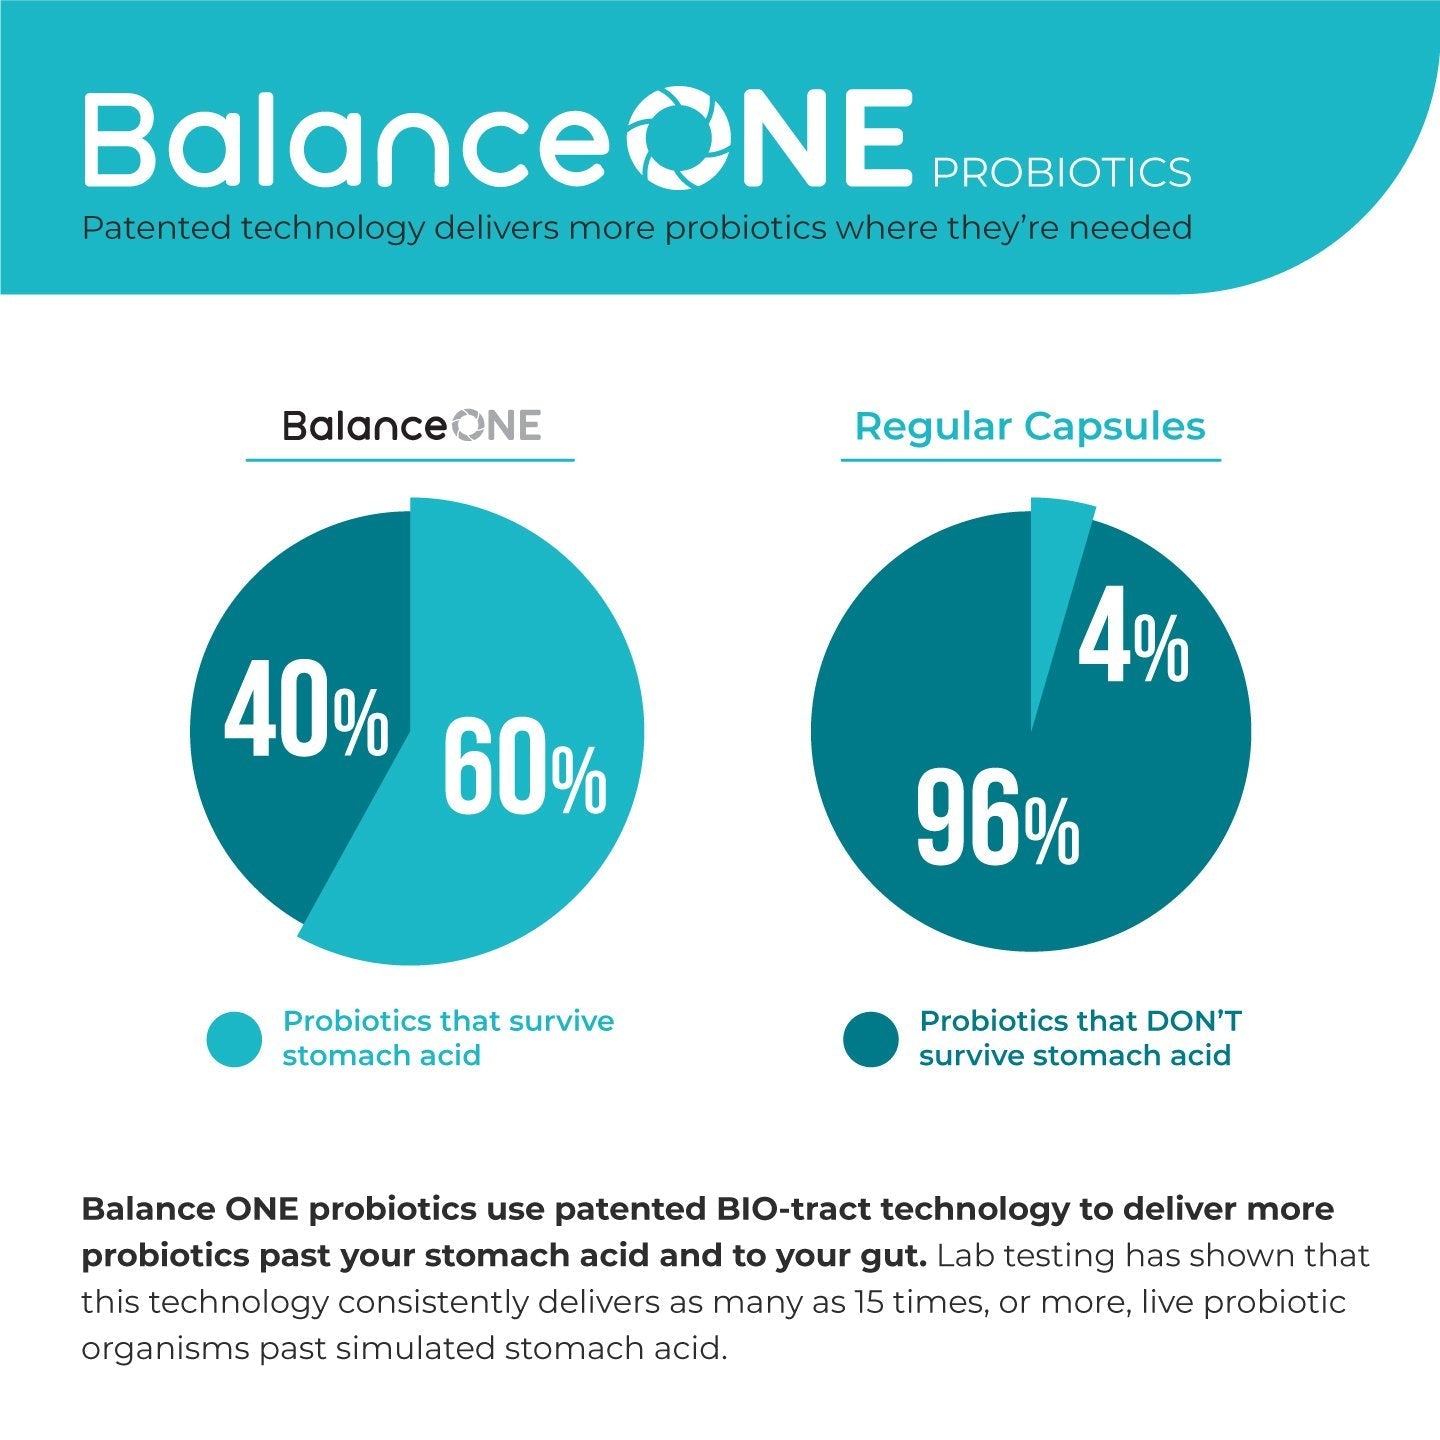 Balance ONE Kids Probiotic - Balance ONE